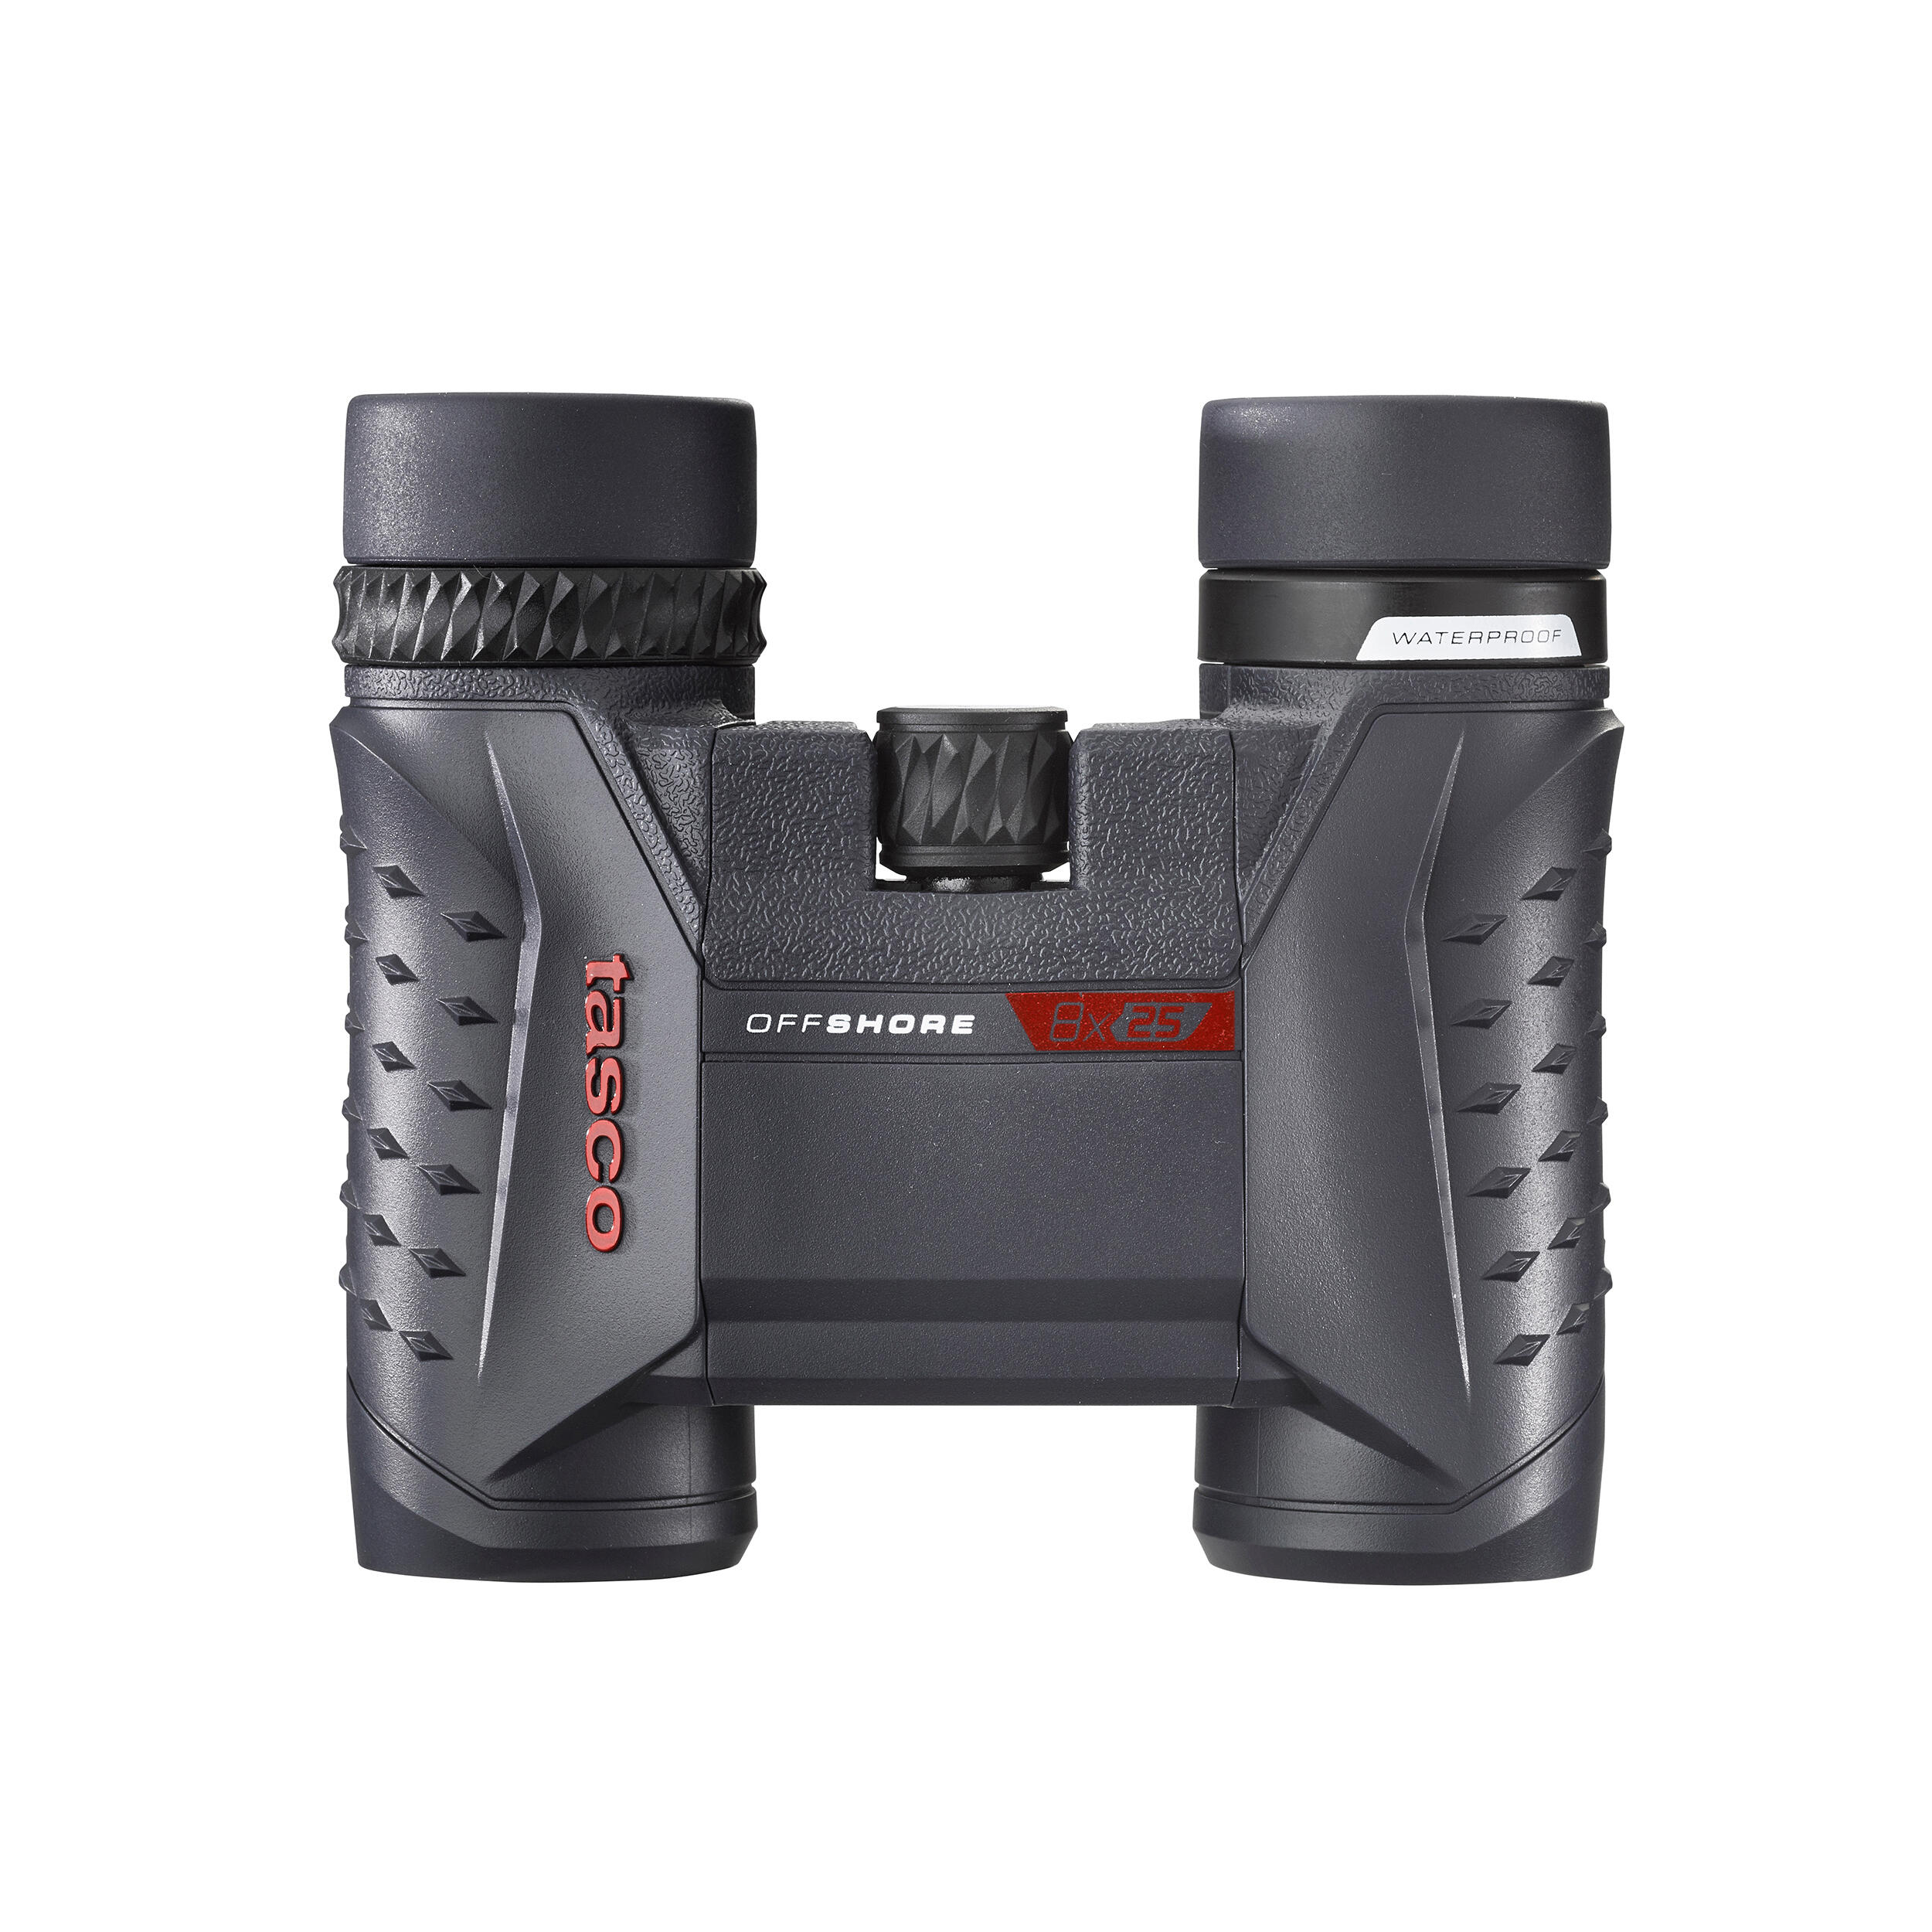 Adult Adjustable Hiking Binoculars Magnification x8 - Tasco Offshore 2/3